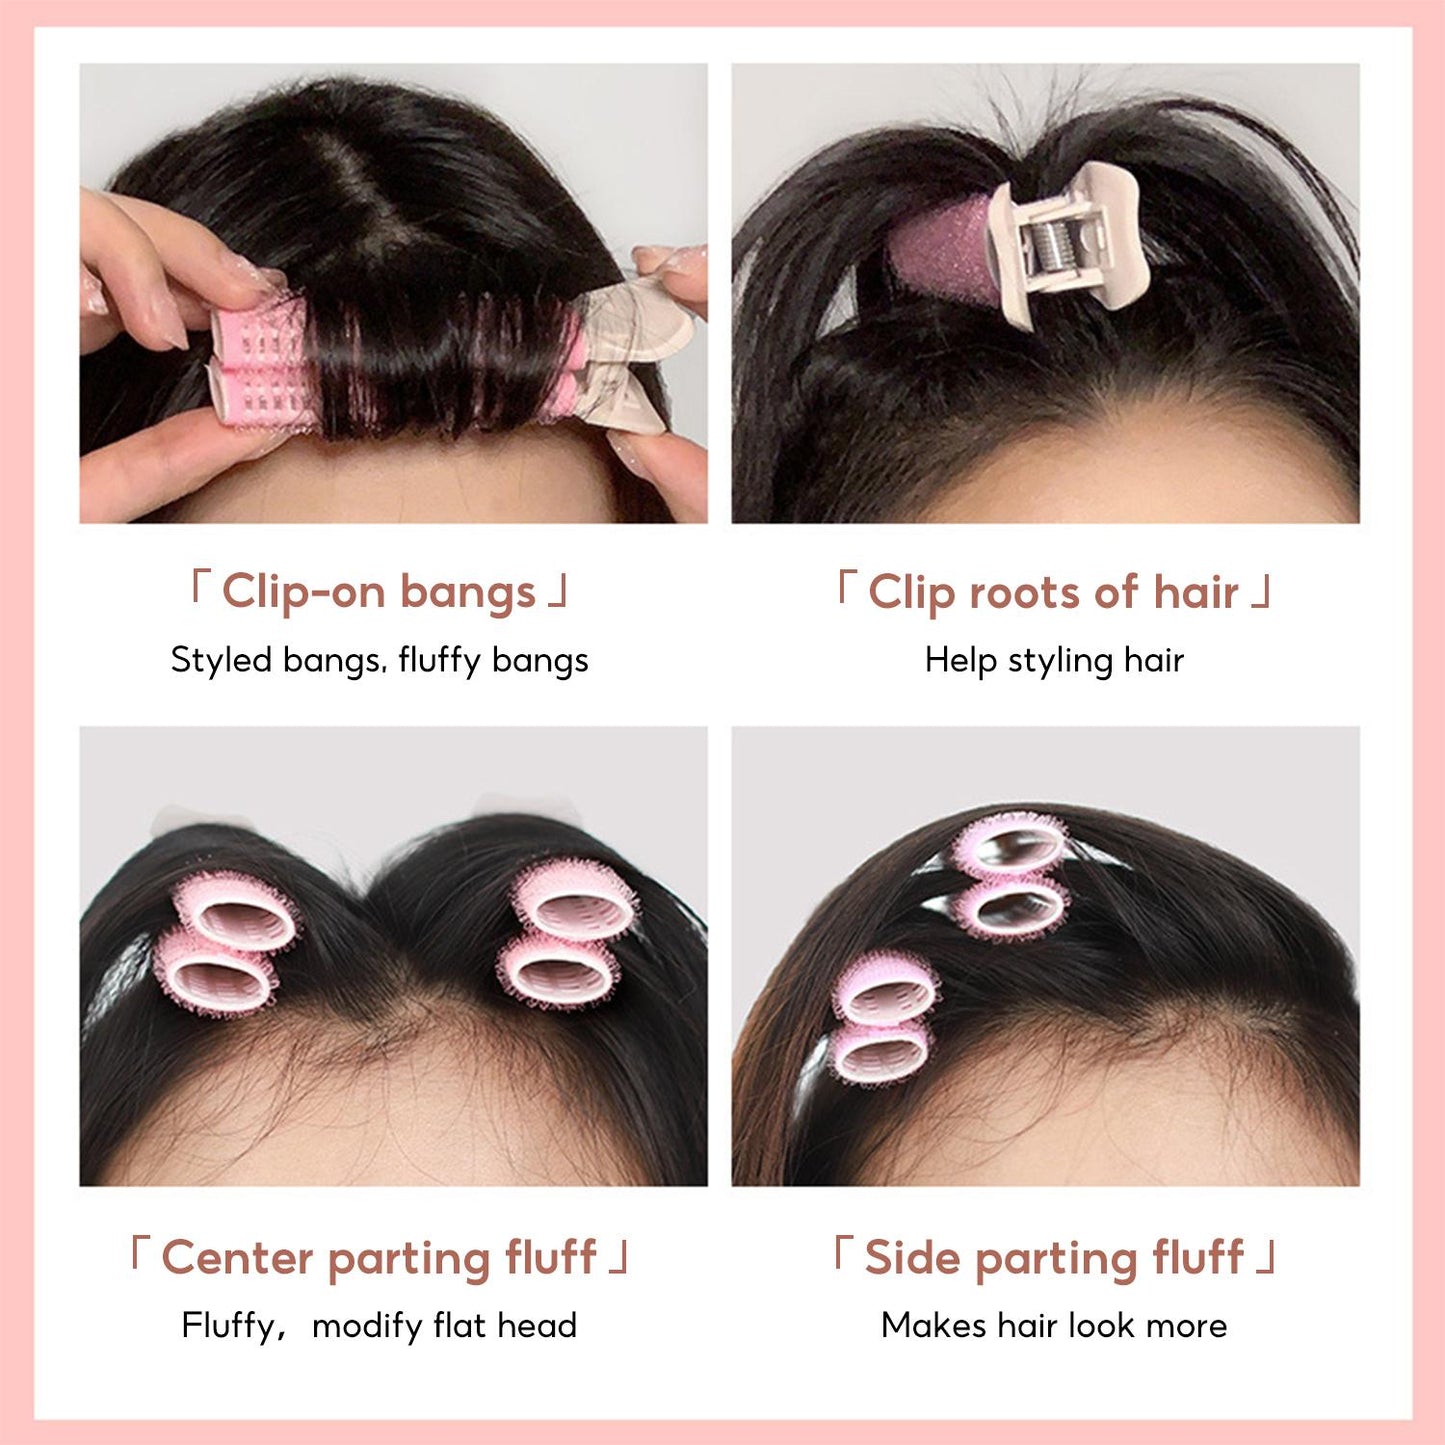 FelinWel - Multifunctional Curly Hair Clips for Hair Styling